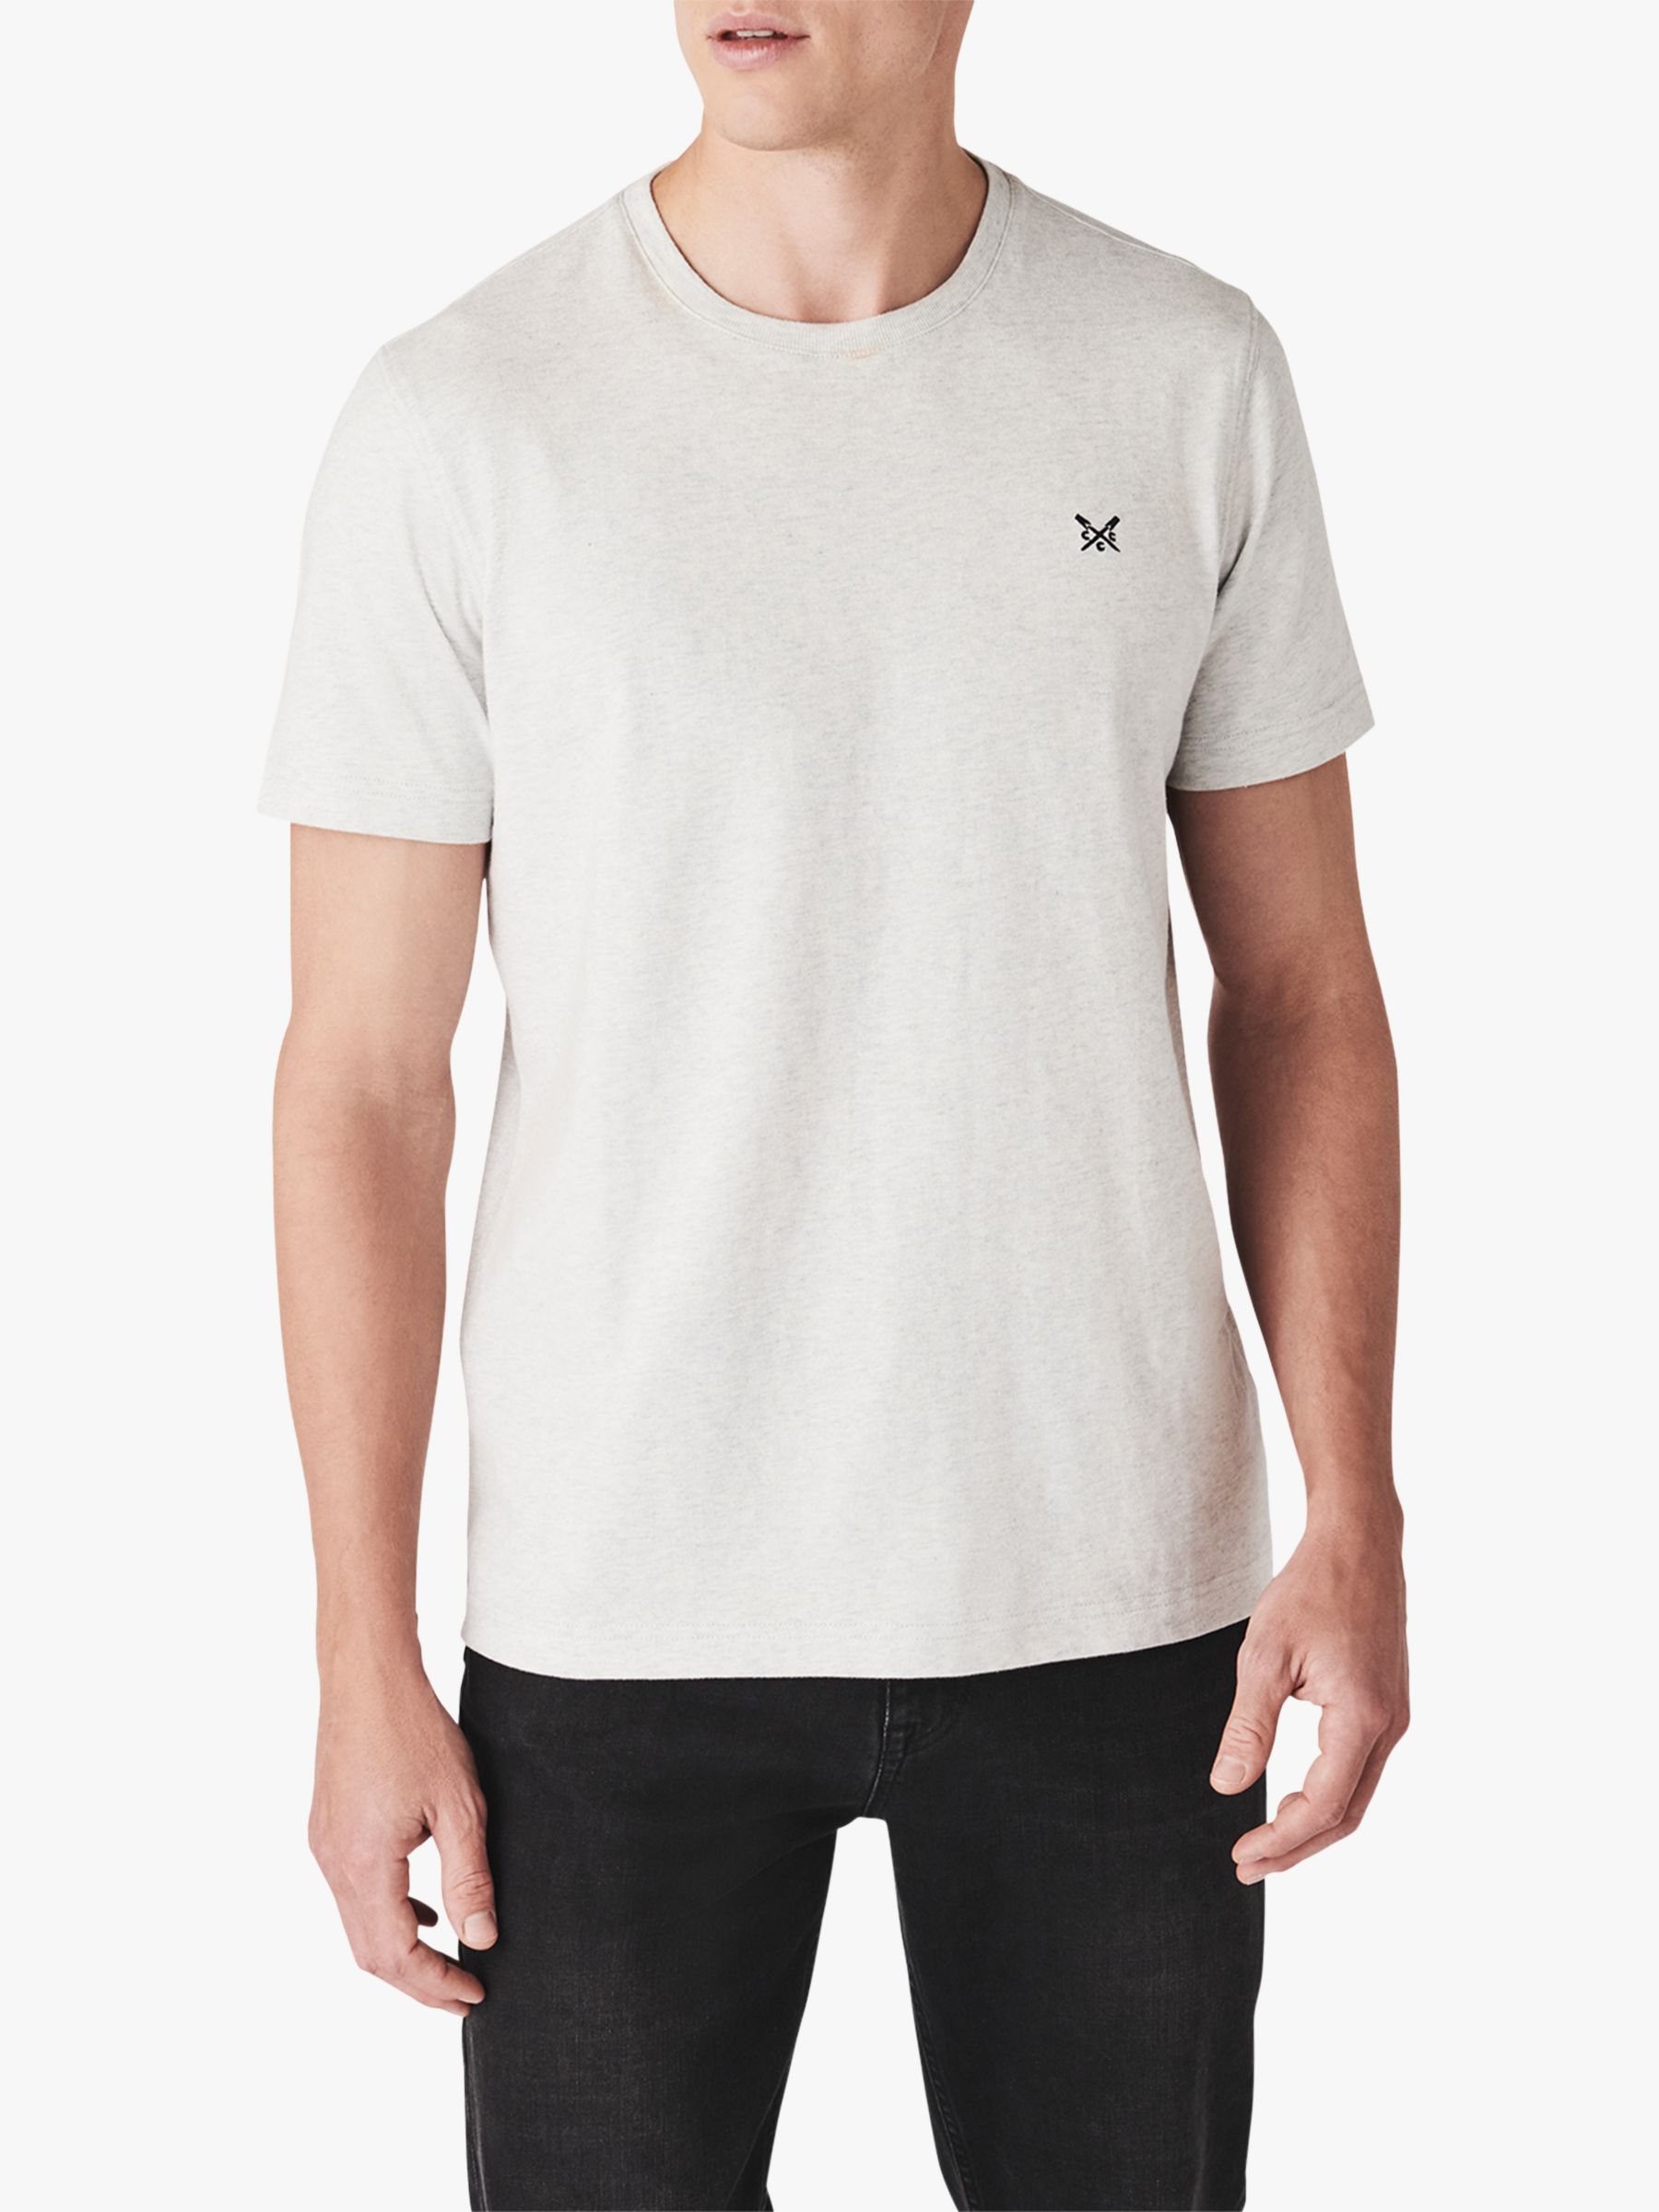 Crew Clothing Crew Neck T-Shirt, Light Grey, XS